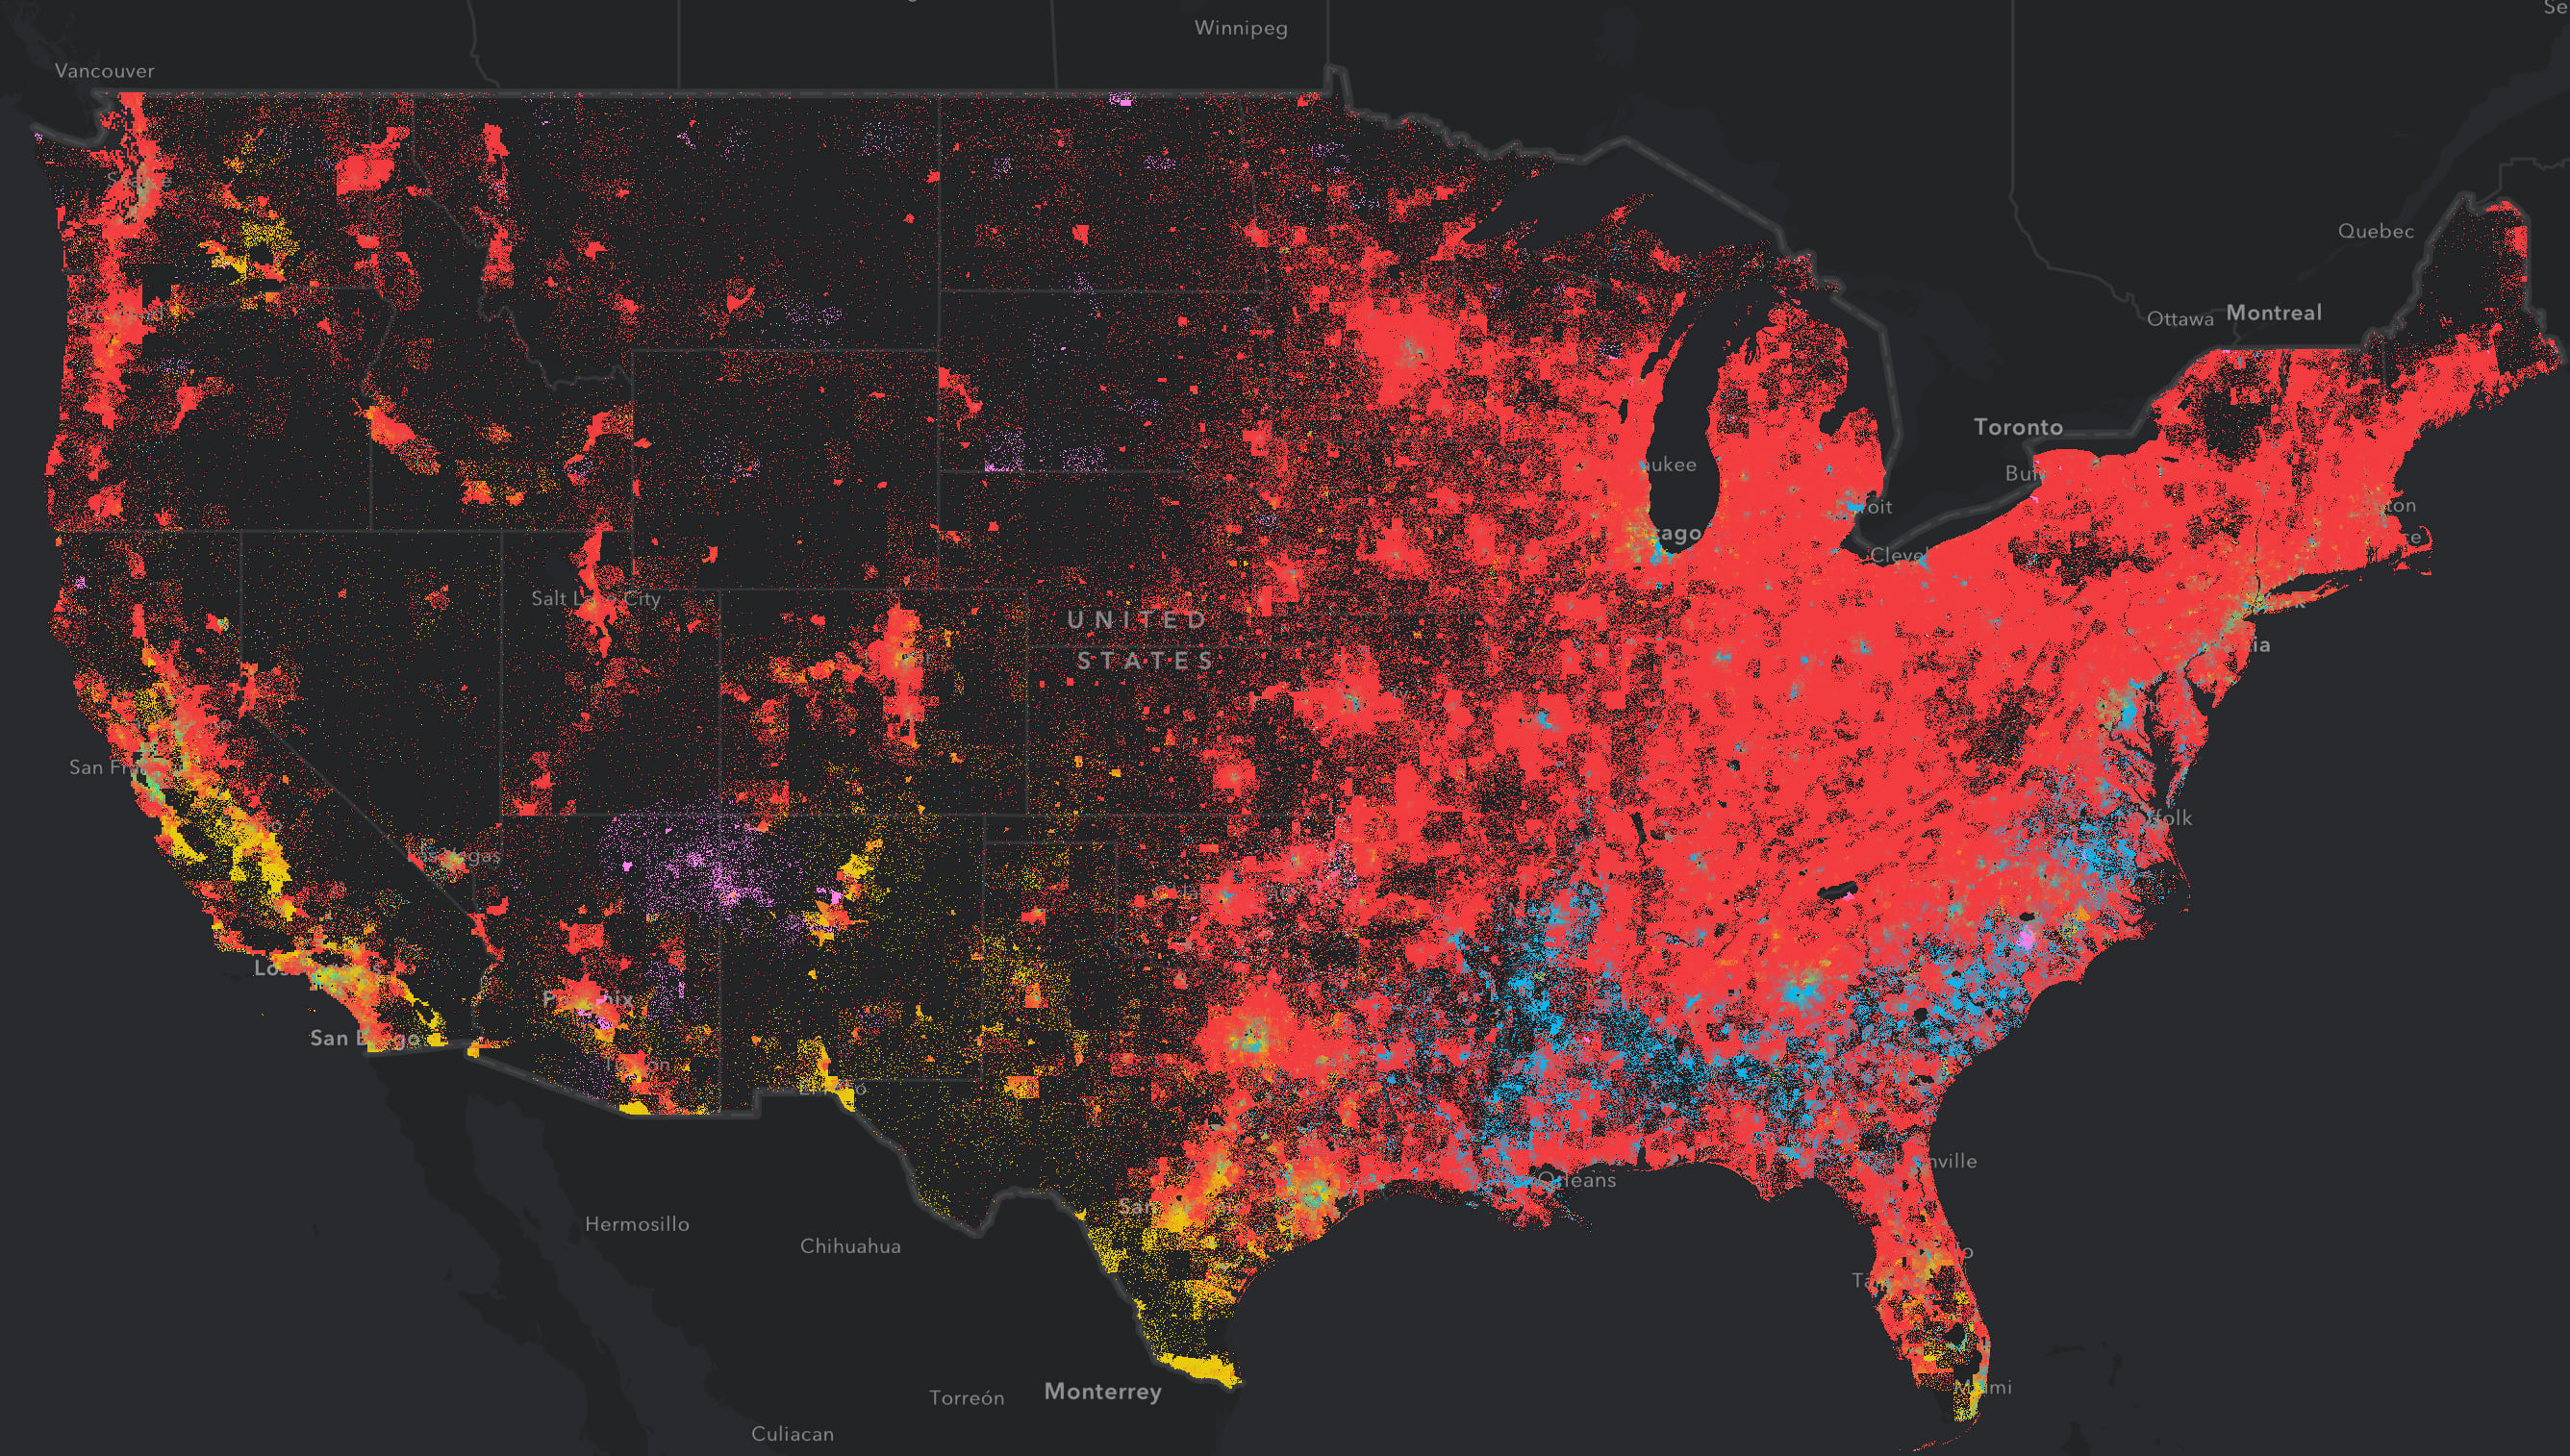 us population density map 2018